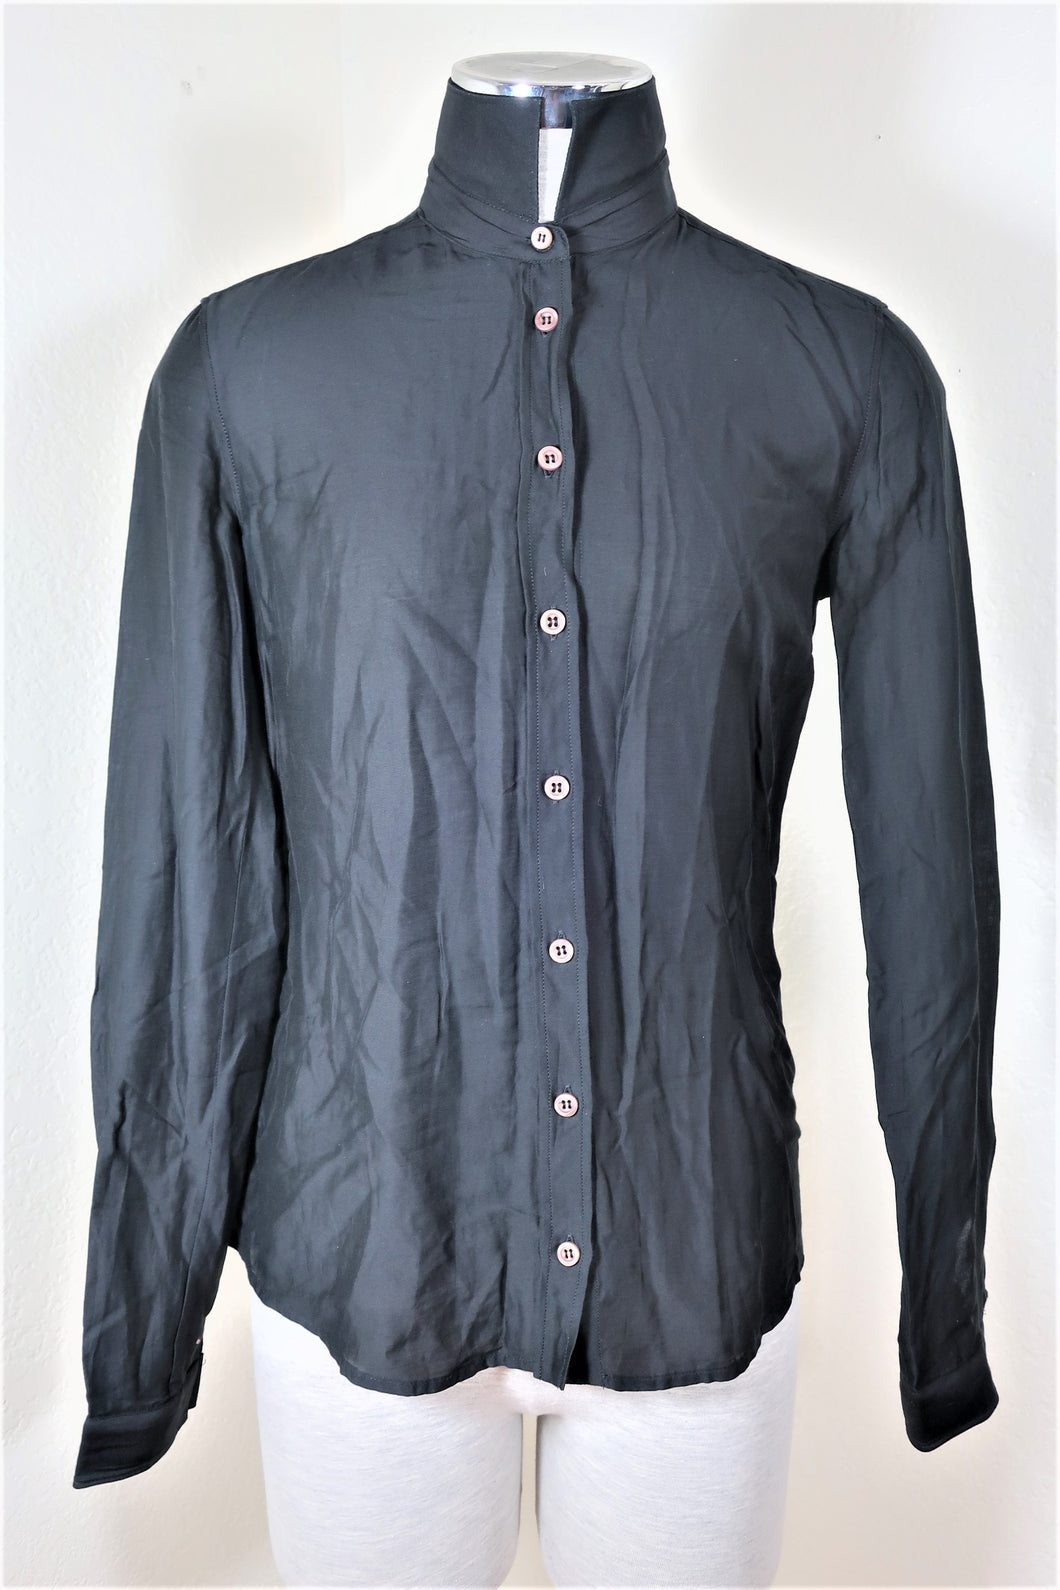 Vintage PRADA Black Button Cotton Long Sleeve  Collared Top Blouse Shirt Small 2 3 4 40